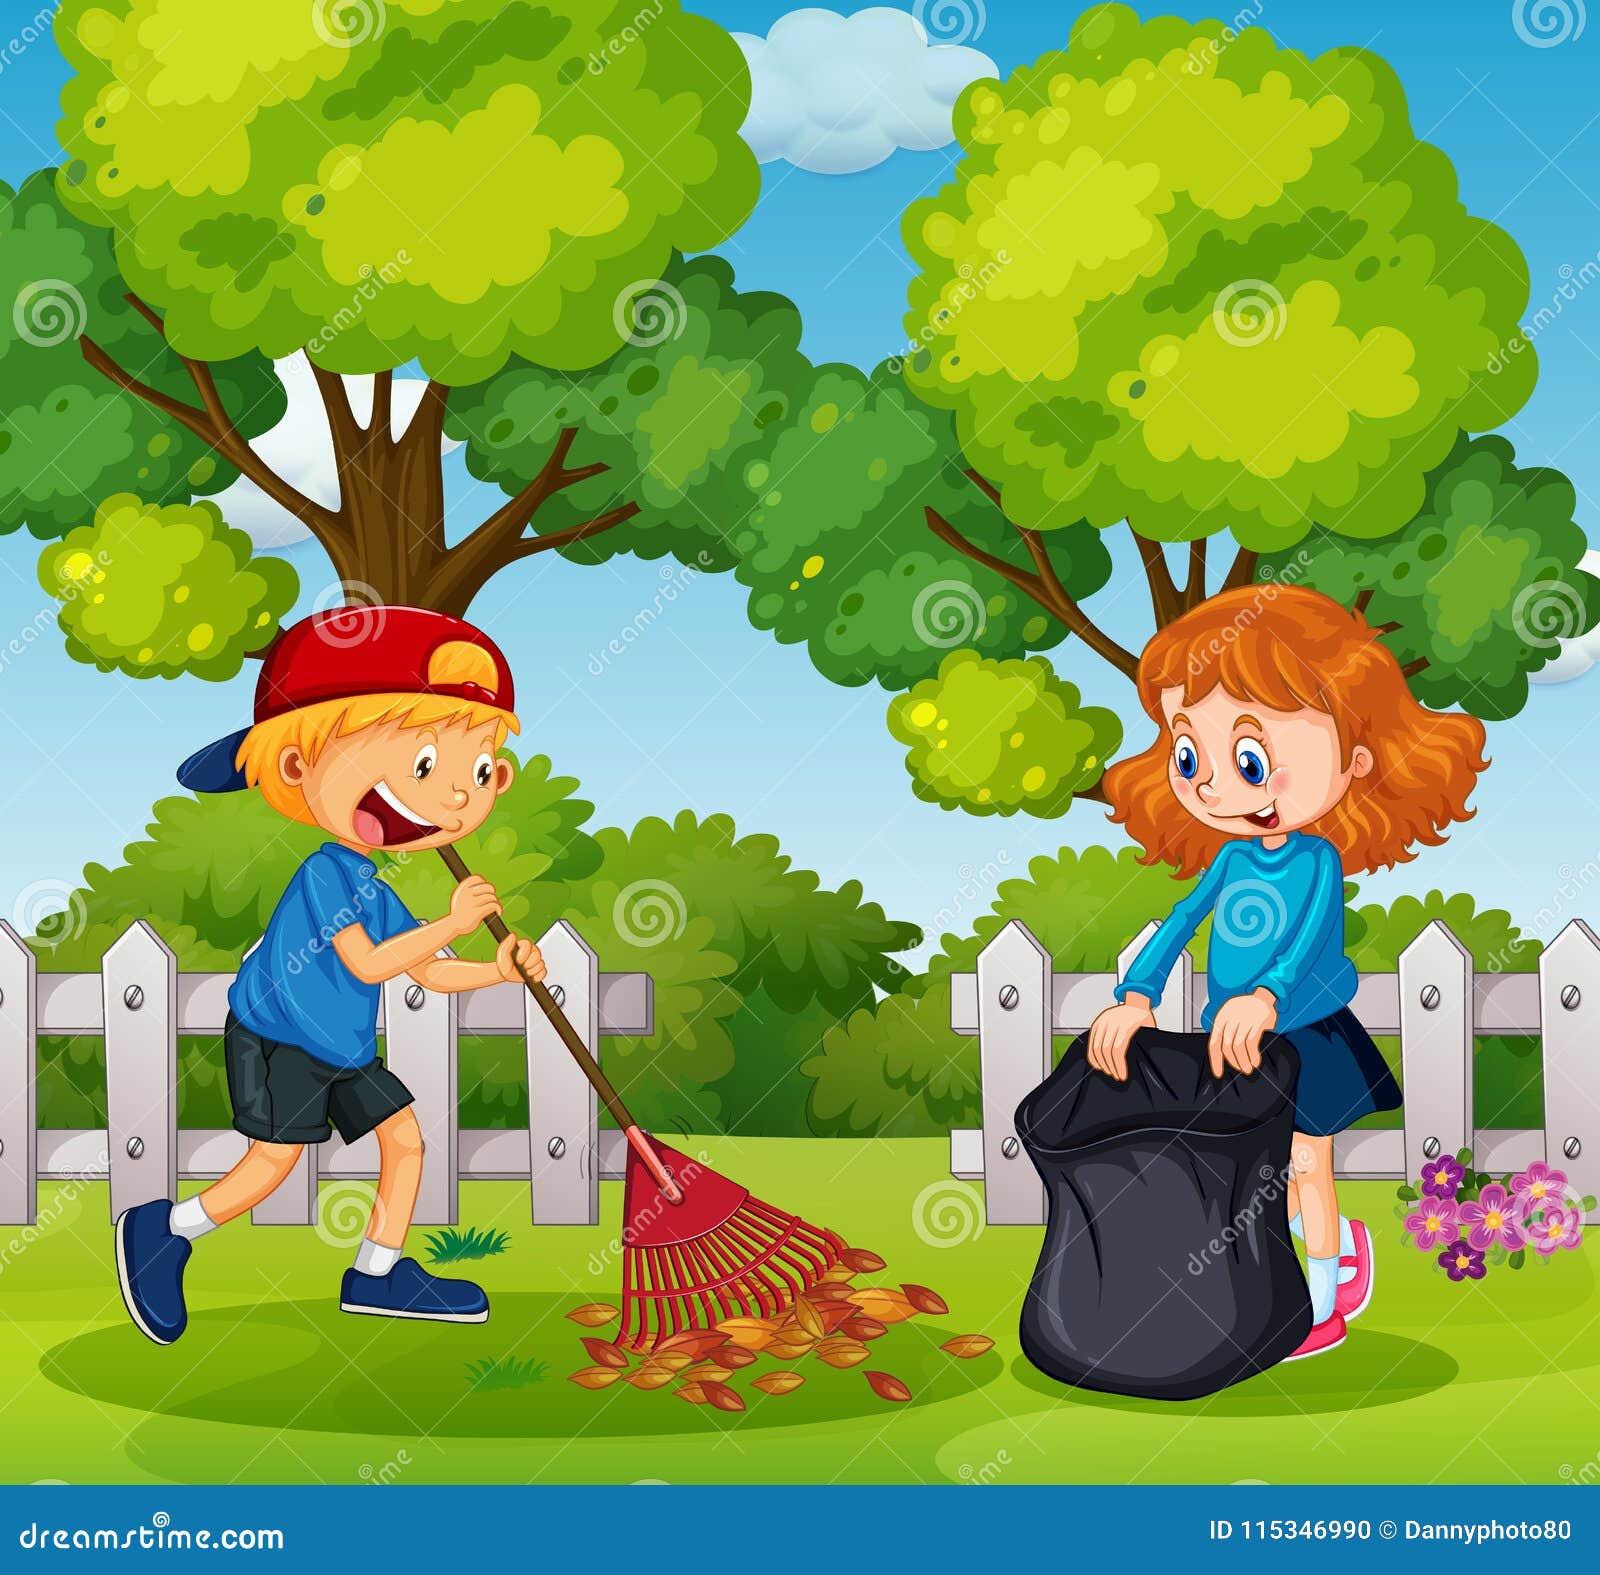 Cleaning Garden Stock Illustrations 2